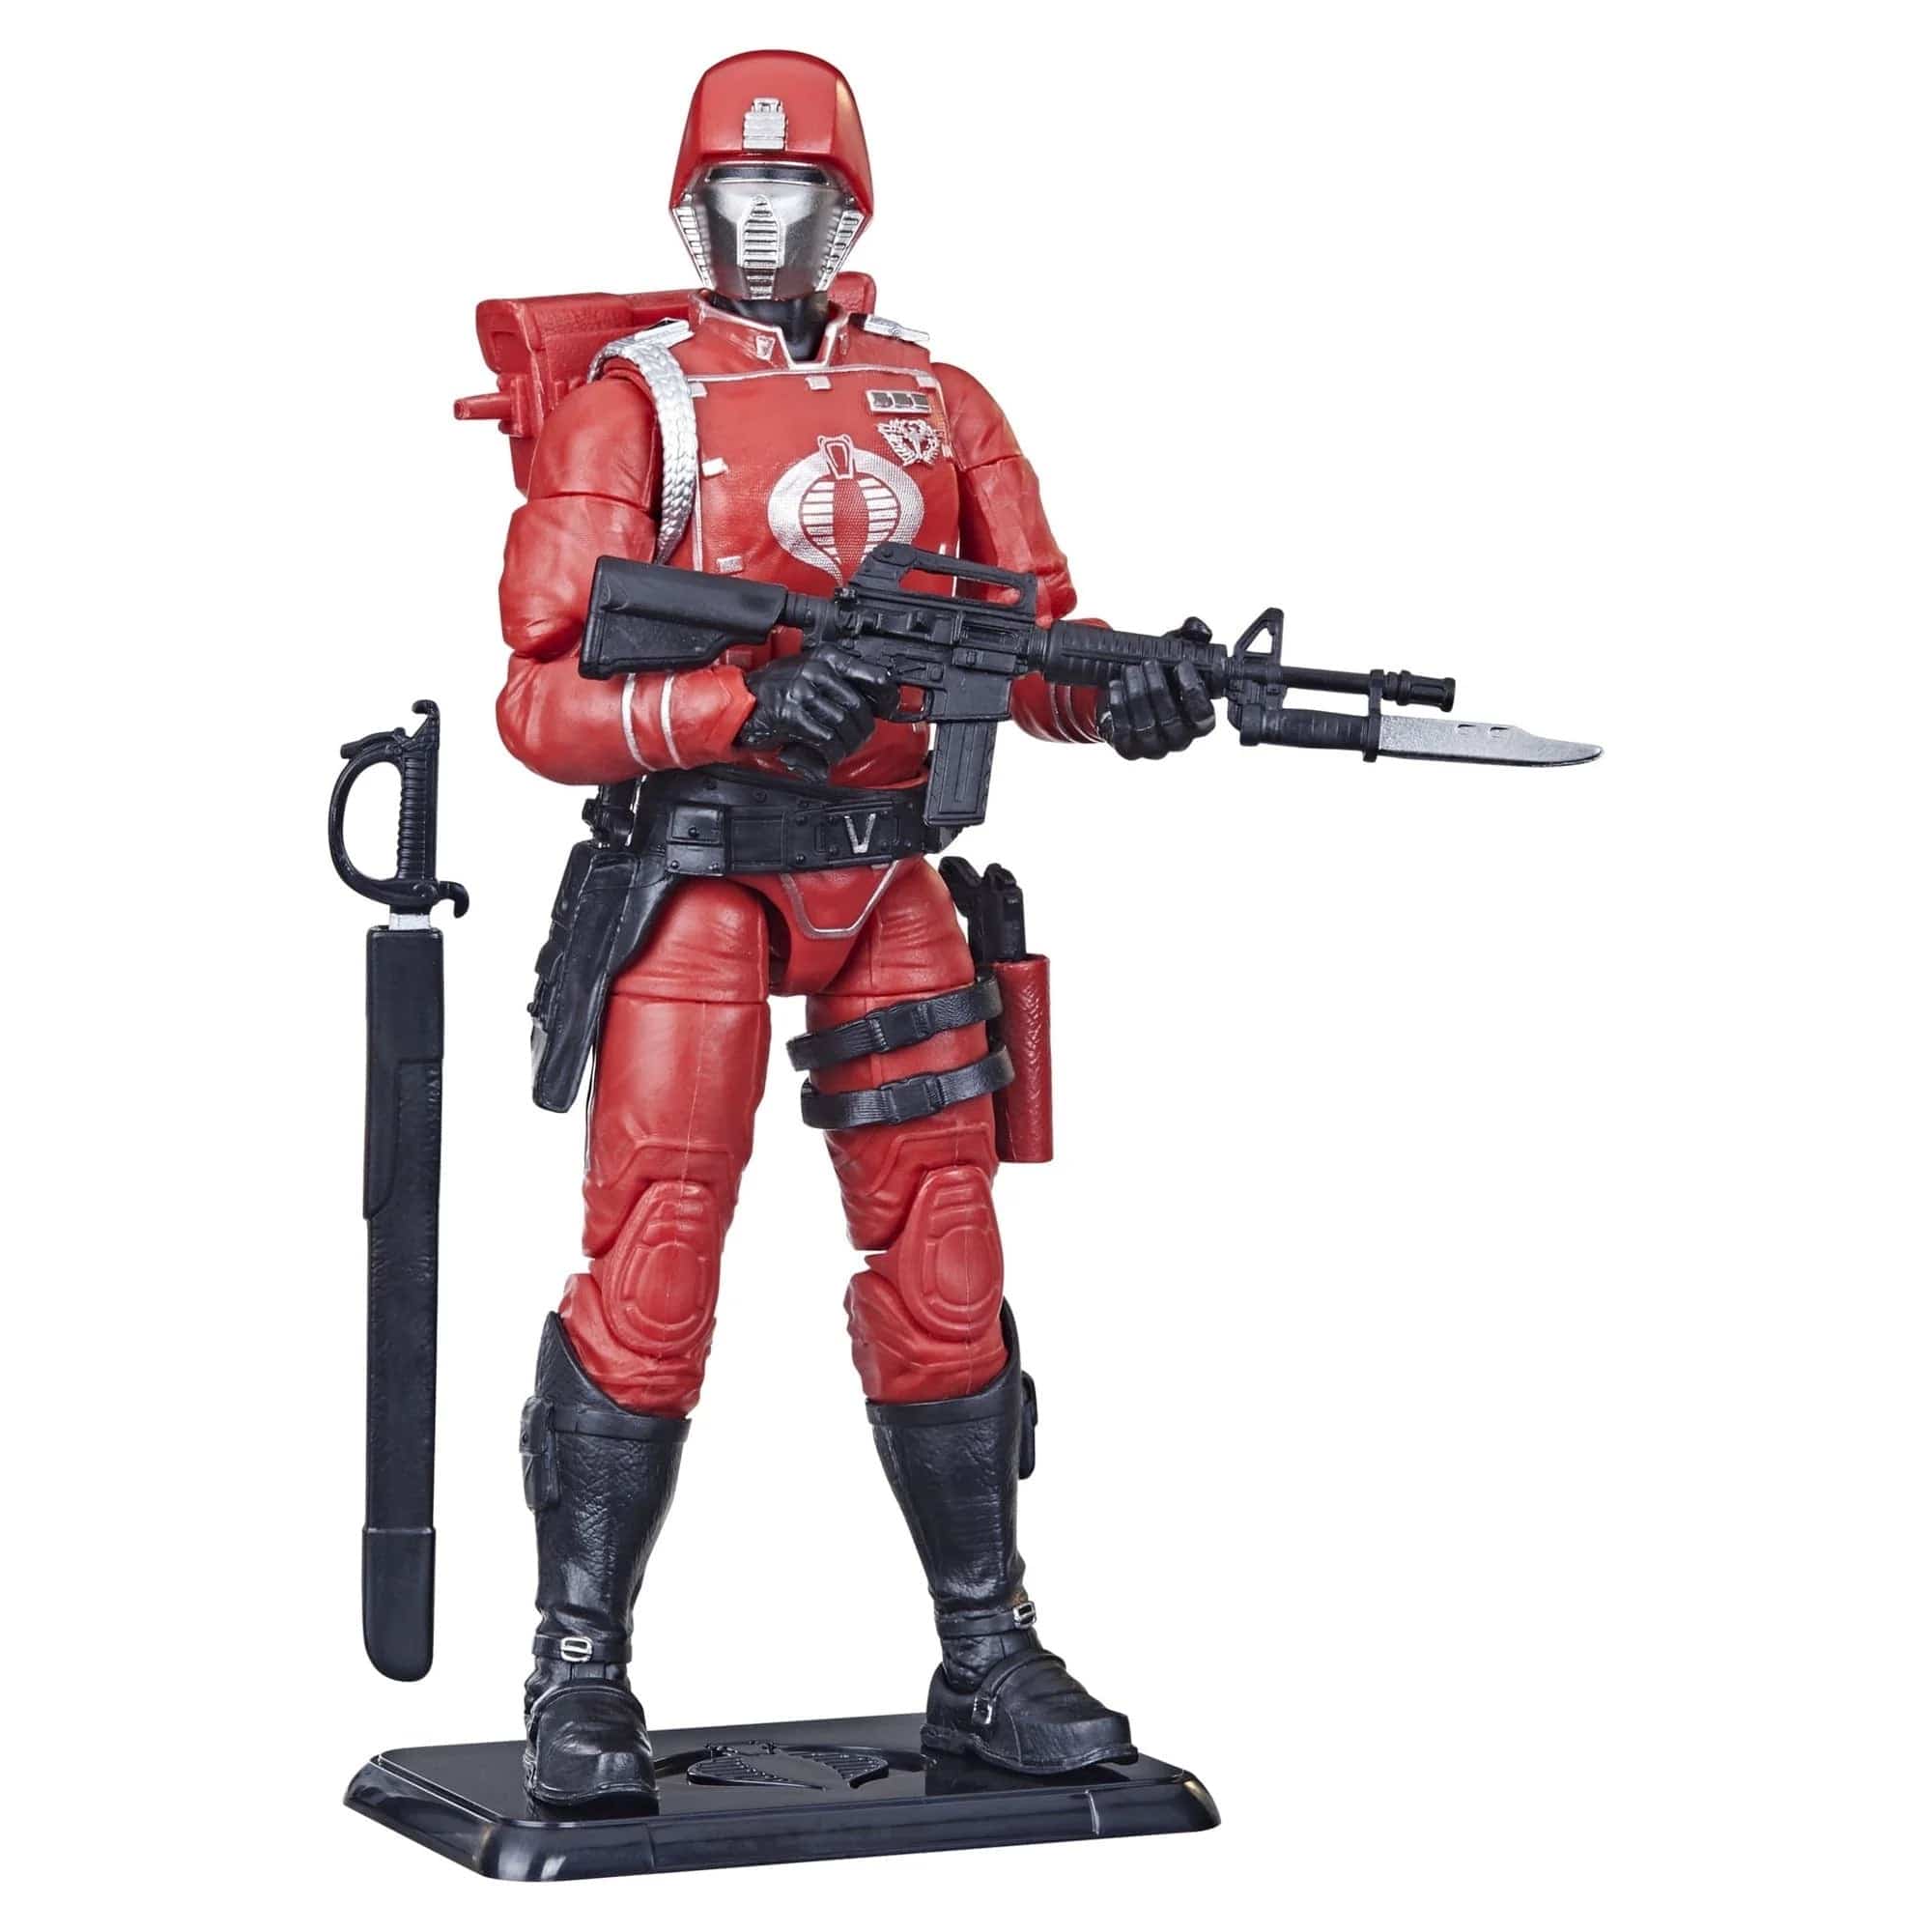 Hasbro G.I. Joe Classified Series Retro Cardback Crimson Guard Action Figure